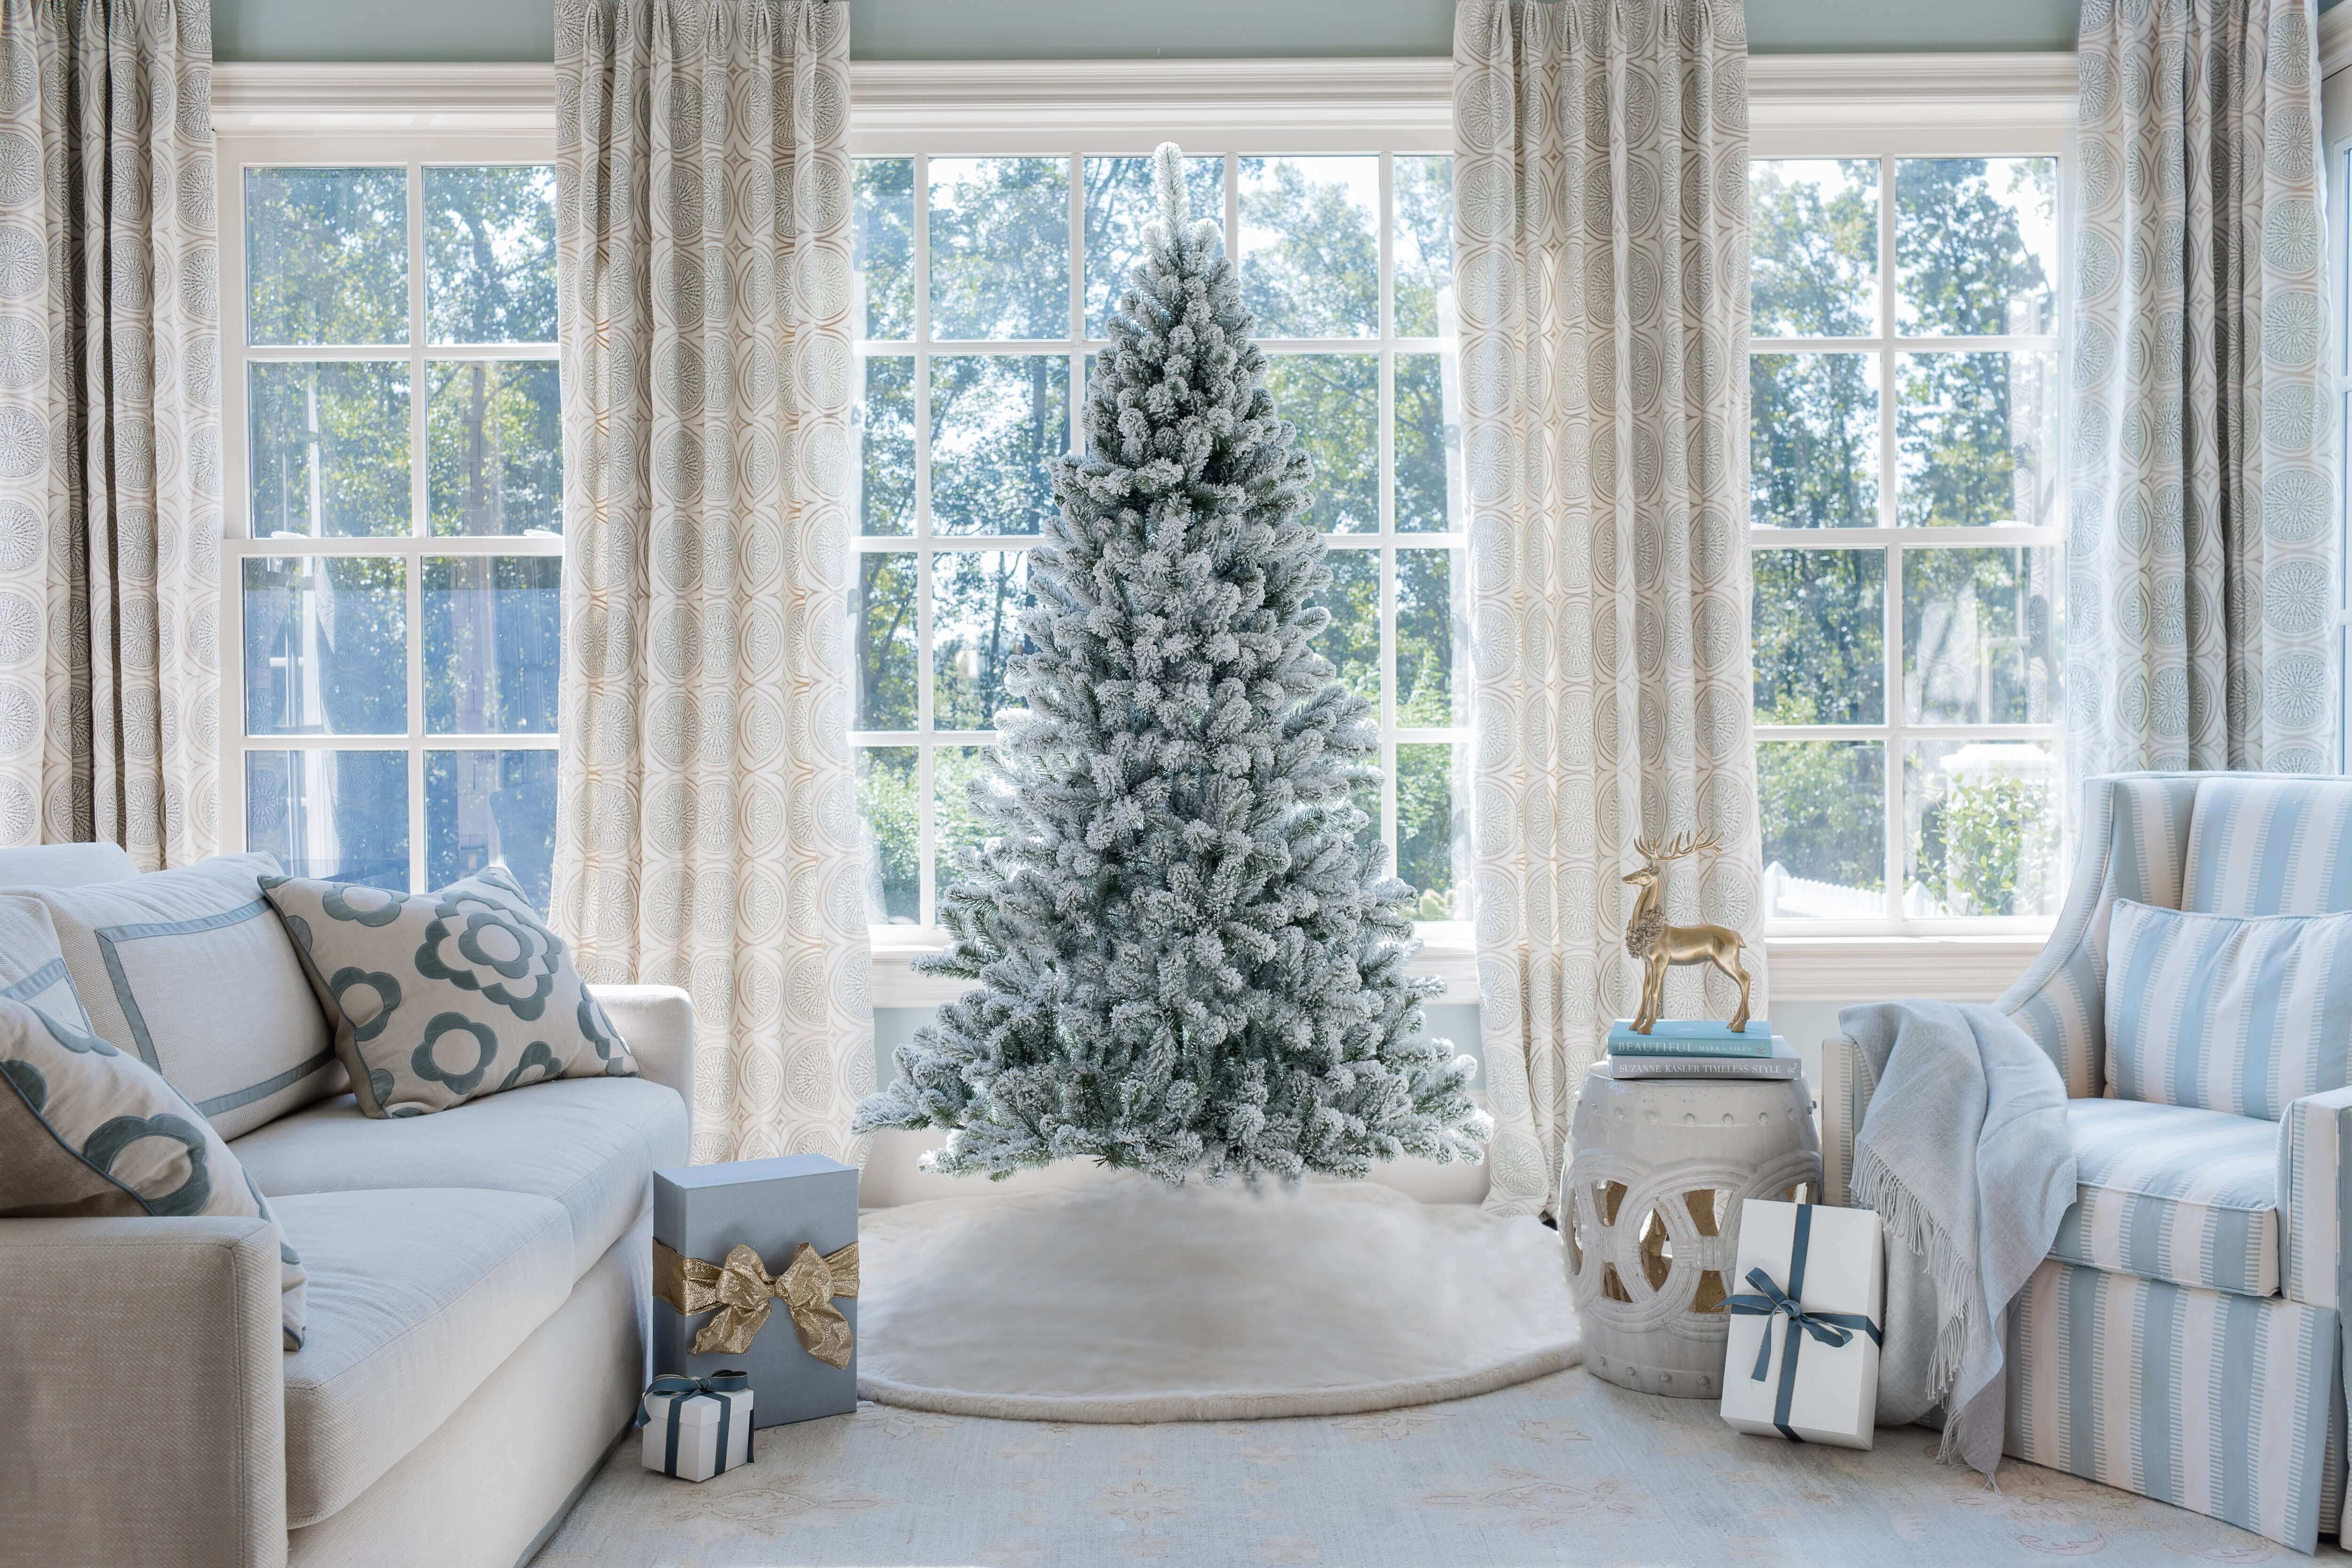 King of Christmas 6' Prince Flock® Artificial Christmas Tree with 350 Warm White LED Lights